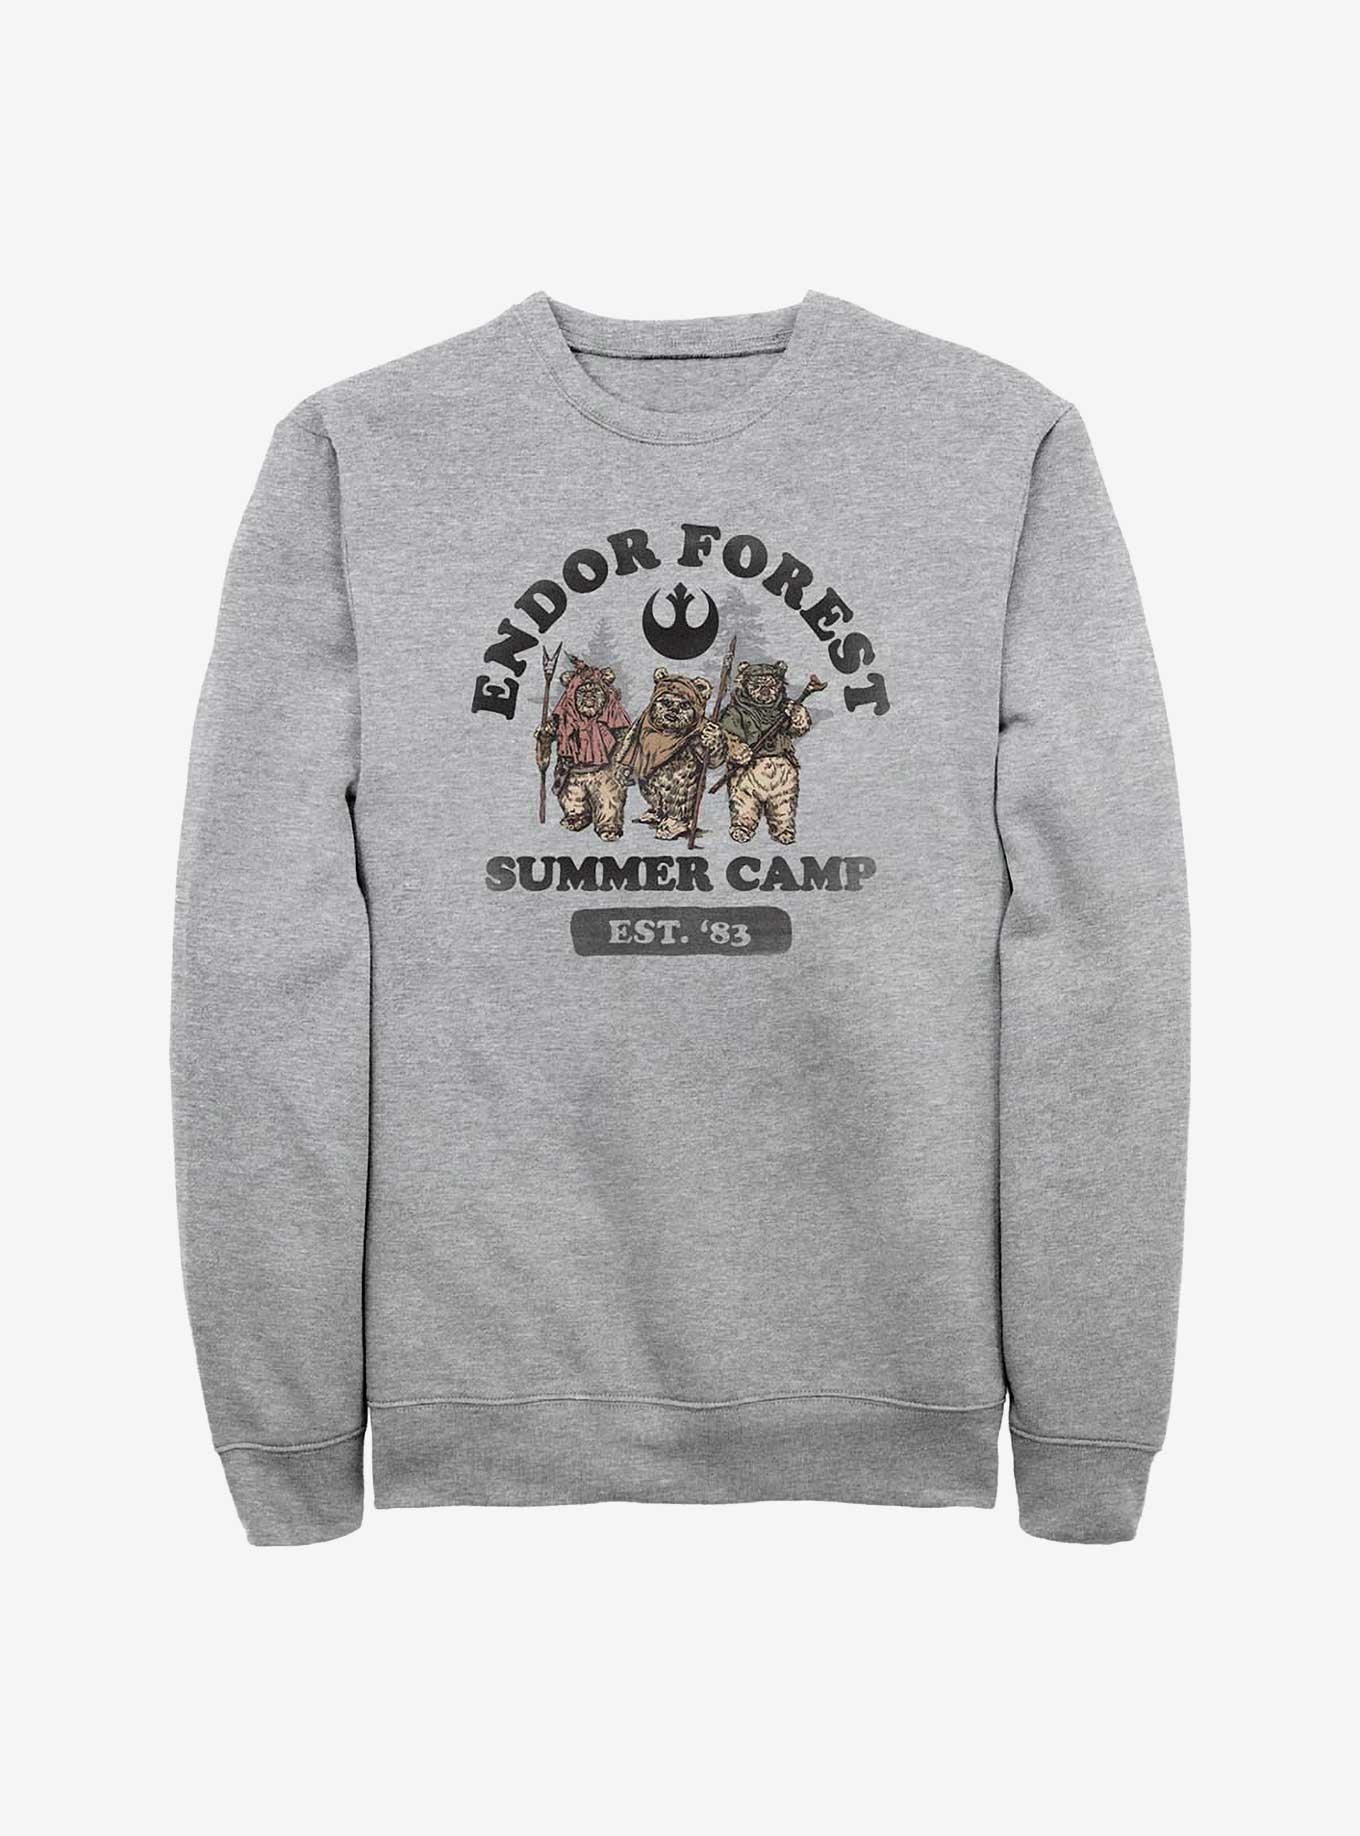 Star Wars Endor Summer Camp Sweatshirt